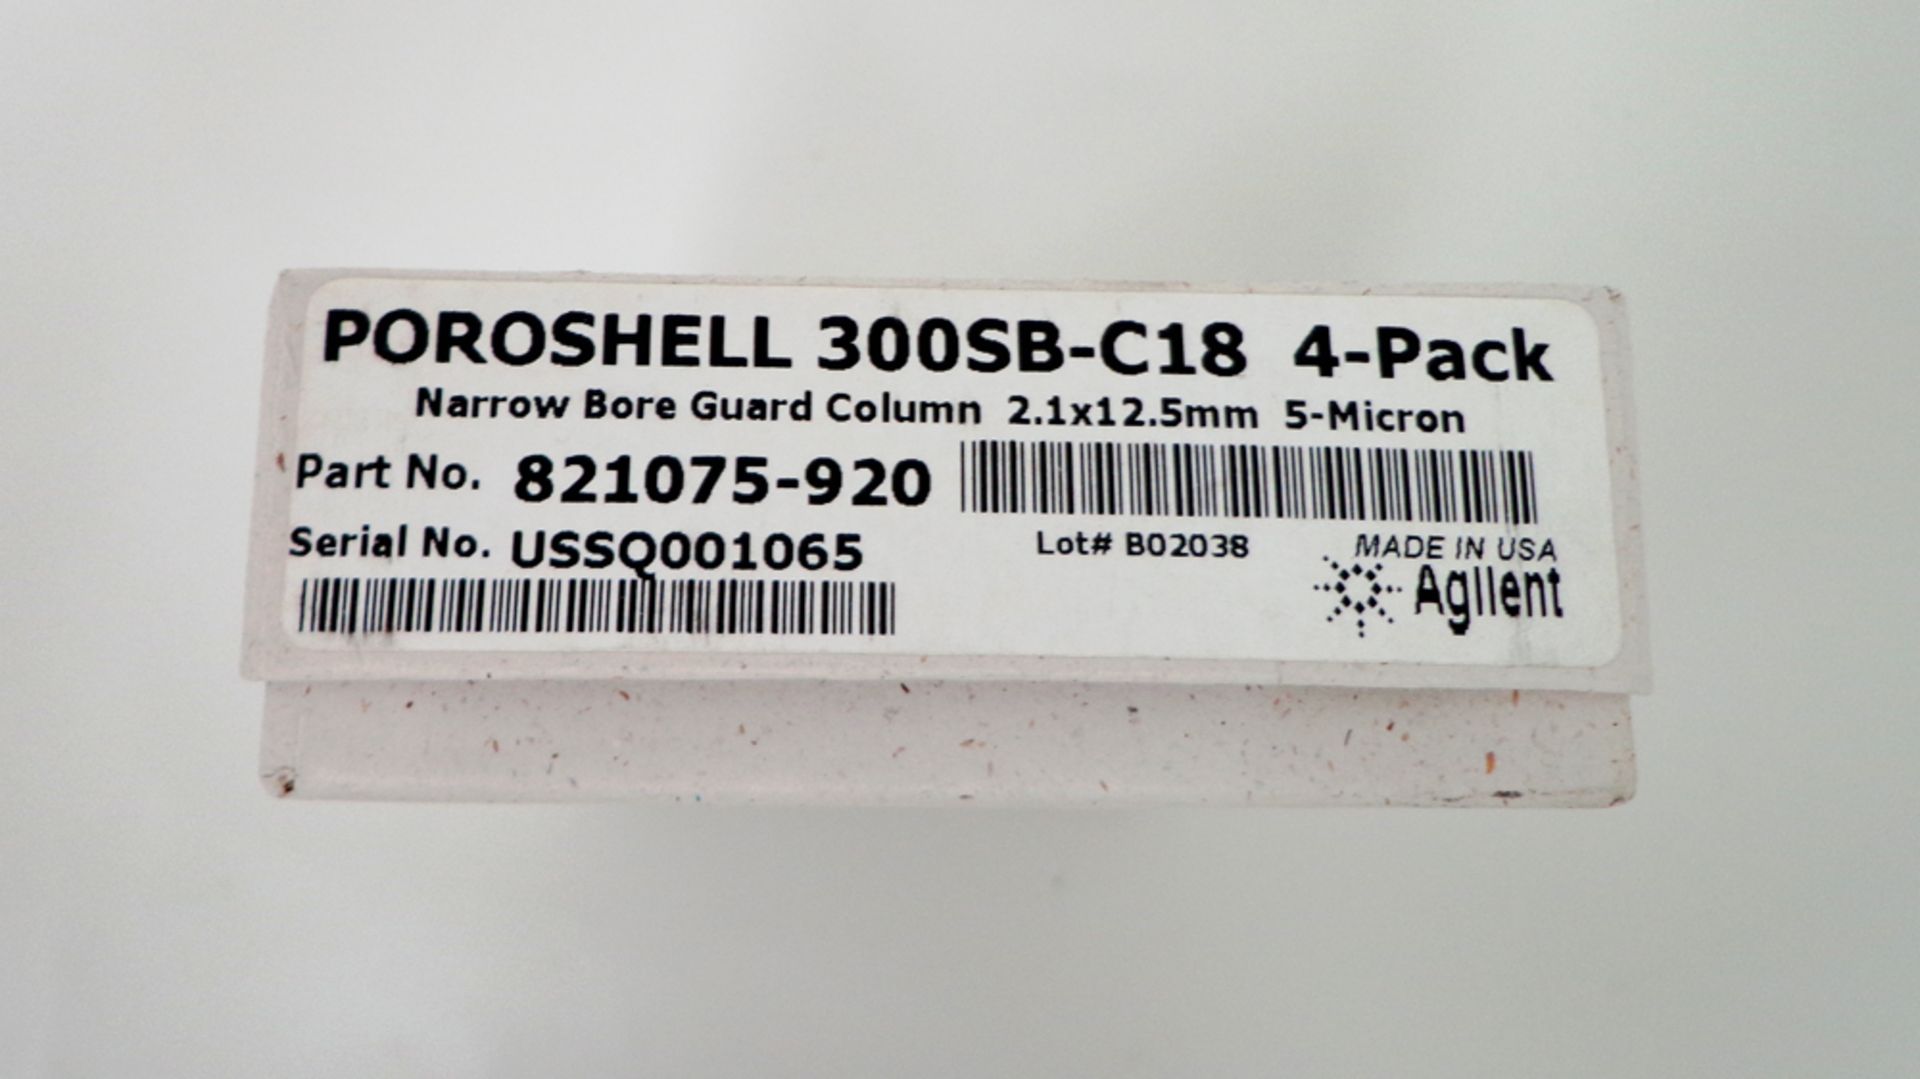 Agilent: Poroshell 300SB-C18 Narrow Bore Guard Column.. 5-Micron; 2.1x12.5mm Narrow Bore Guard - Image 2 of 2